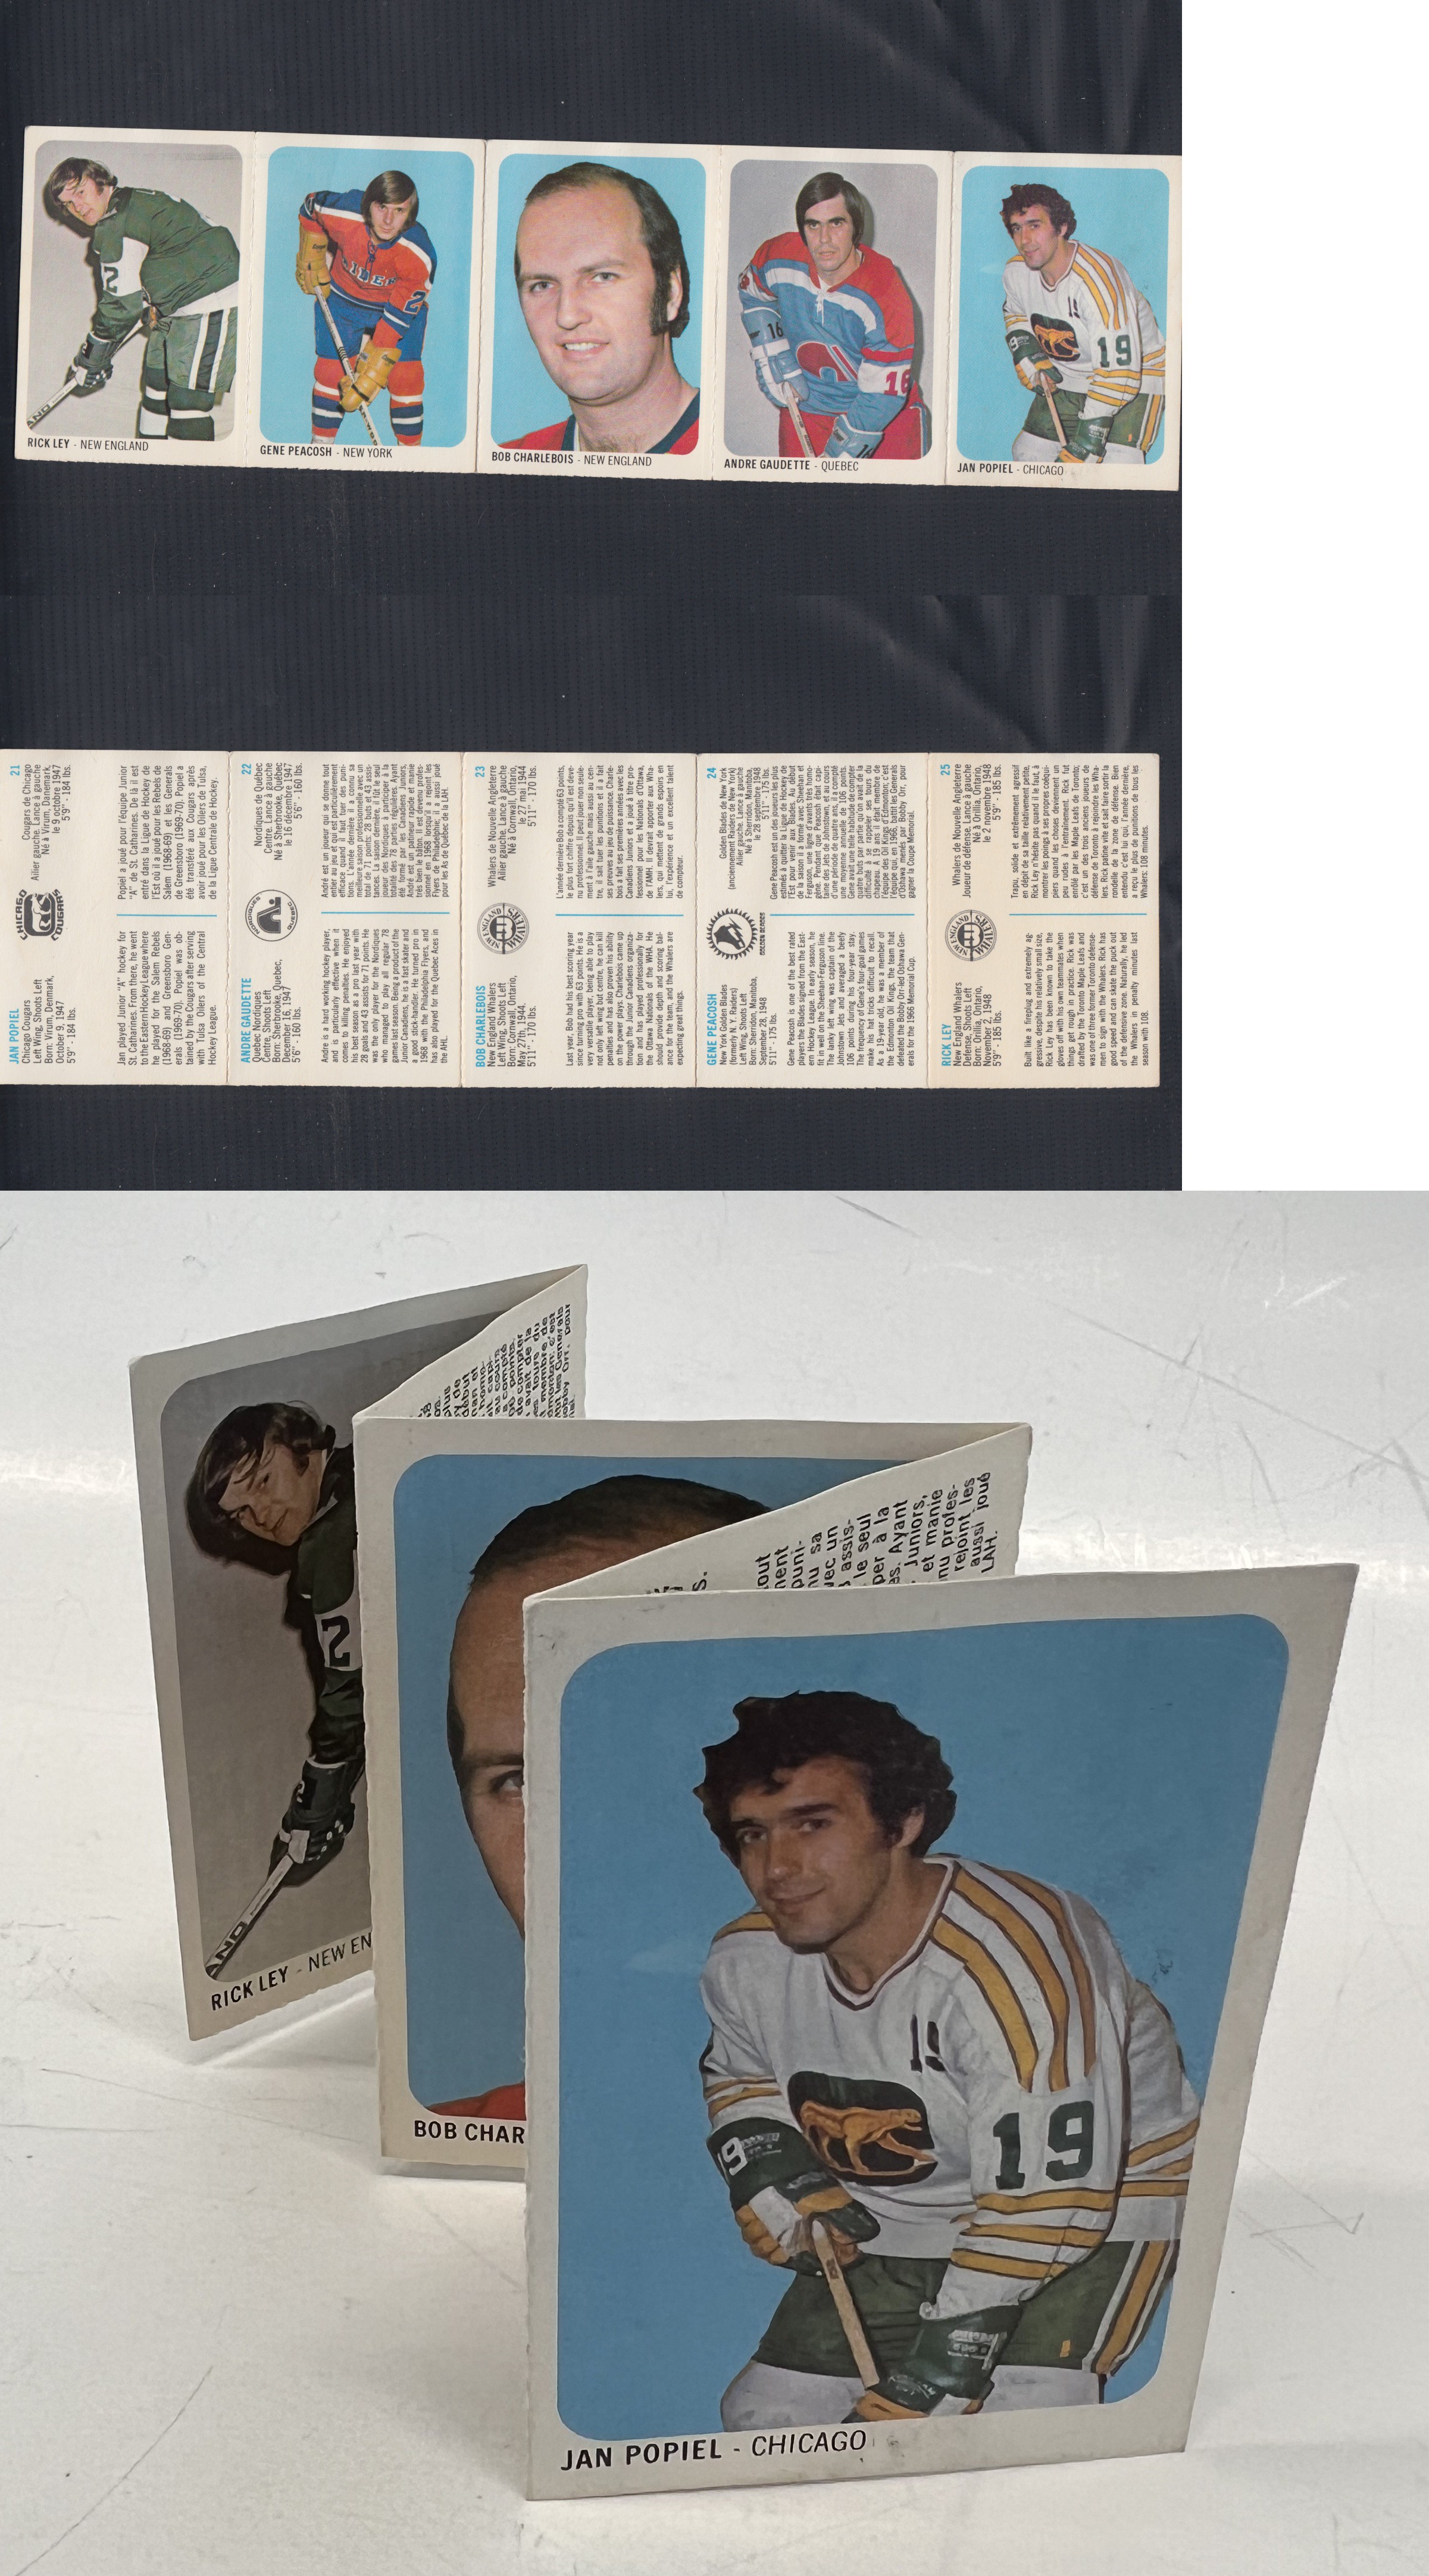 1973-74 WHA QUAKER OATS HOCKEY CARD PANEL 21-25 photo